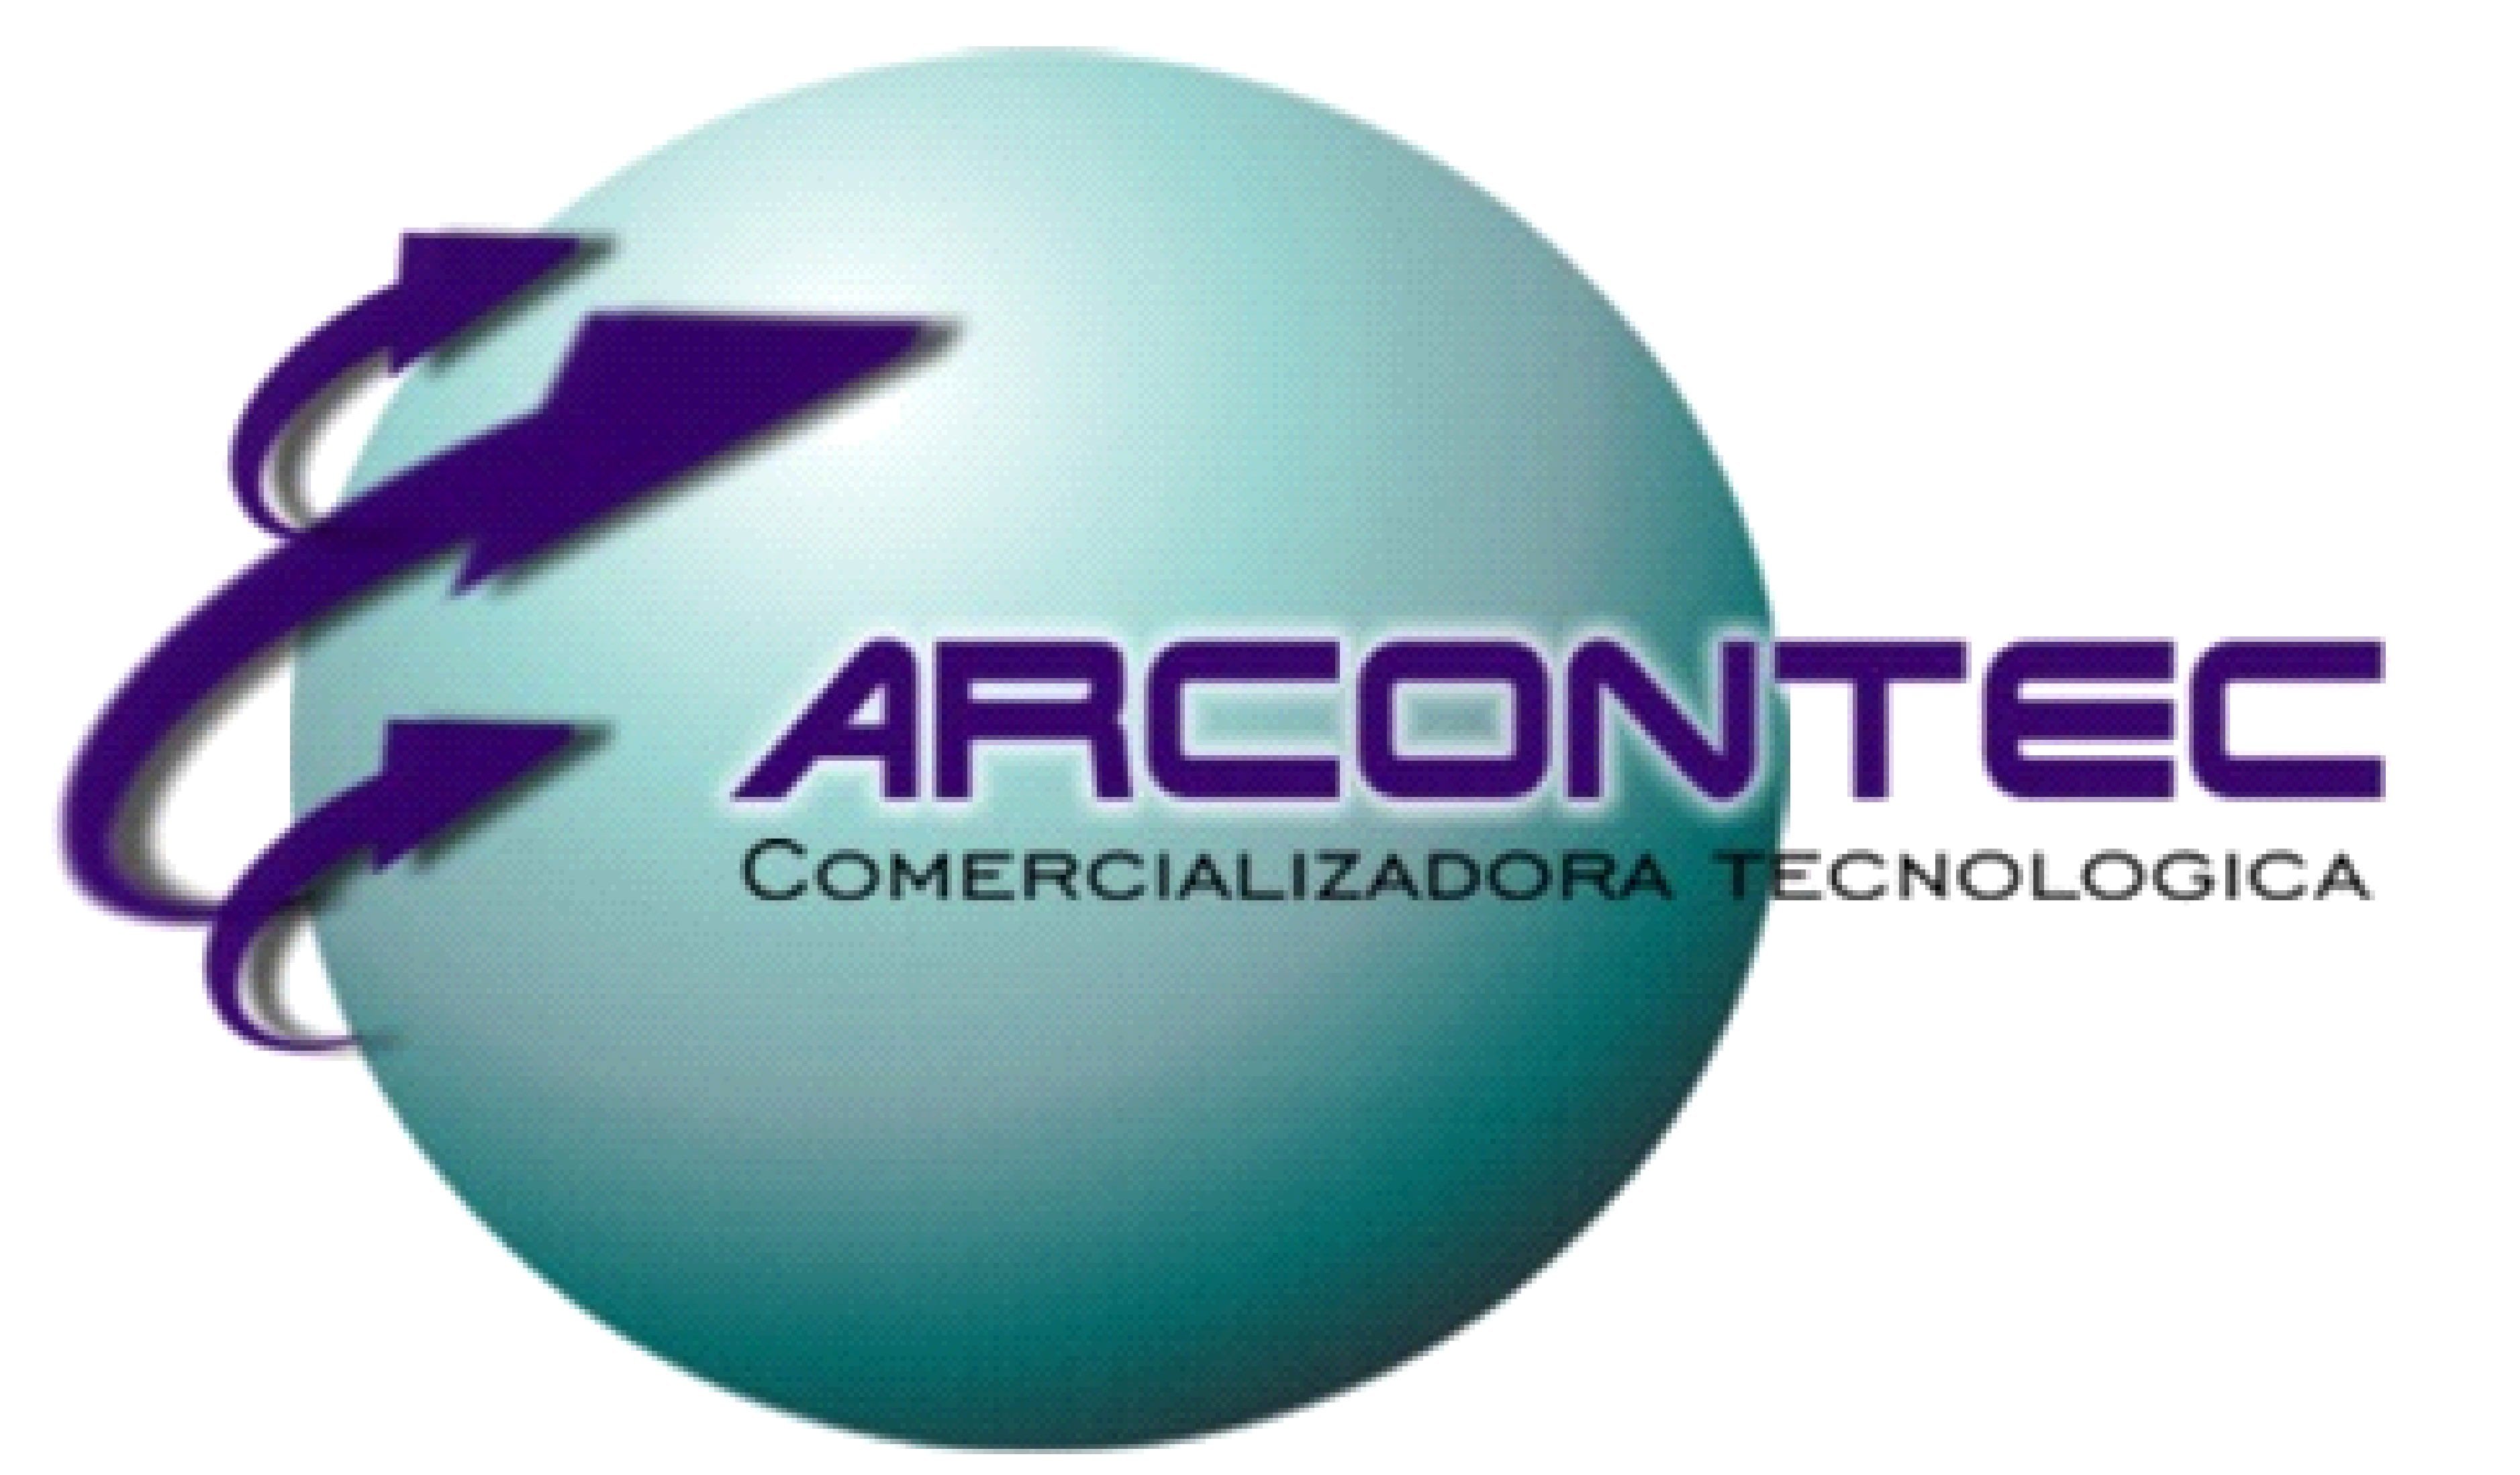 Arcontec